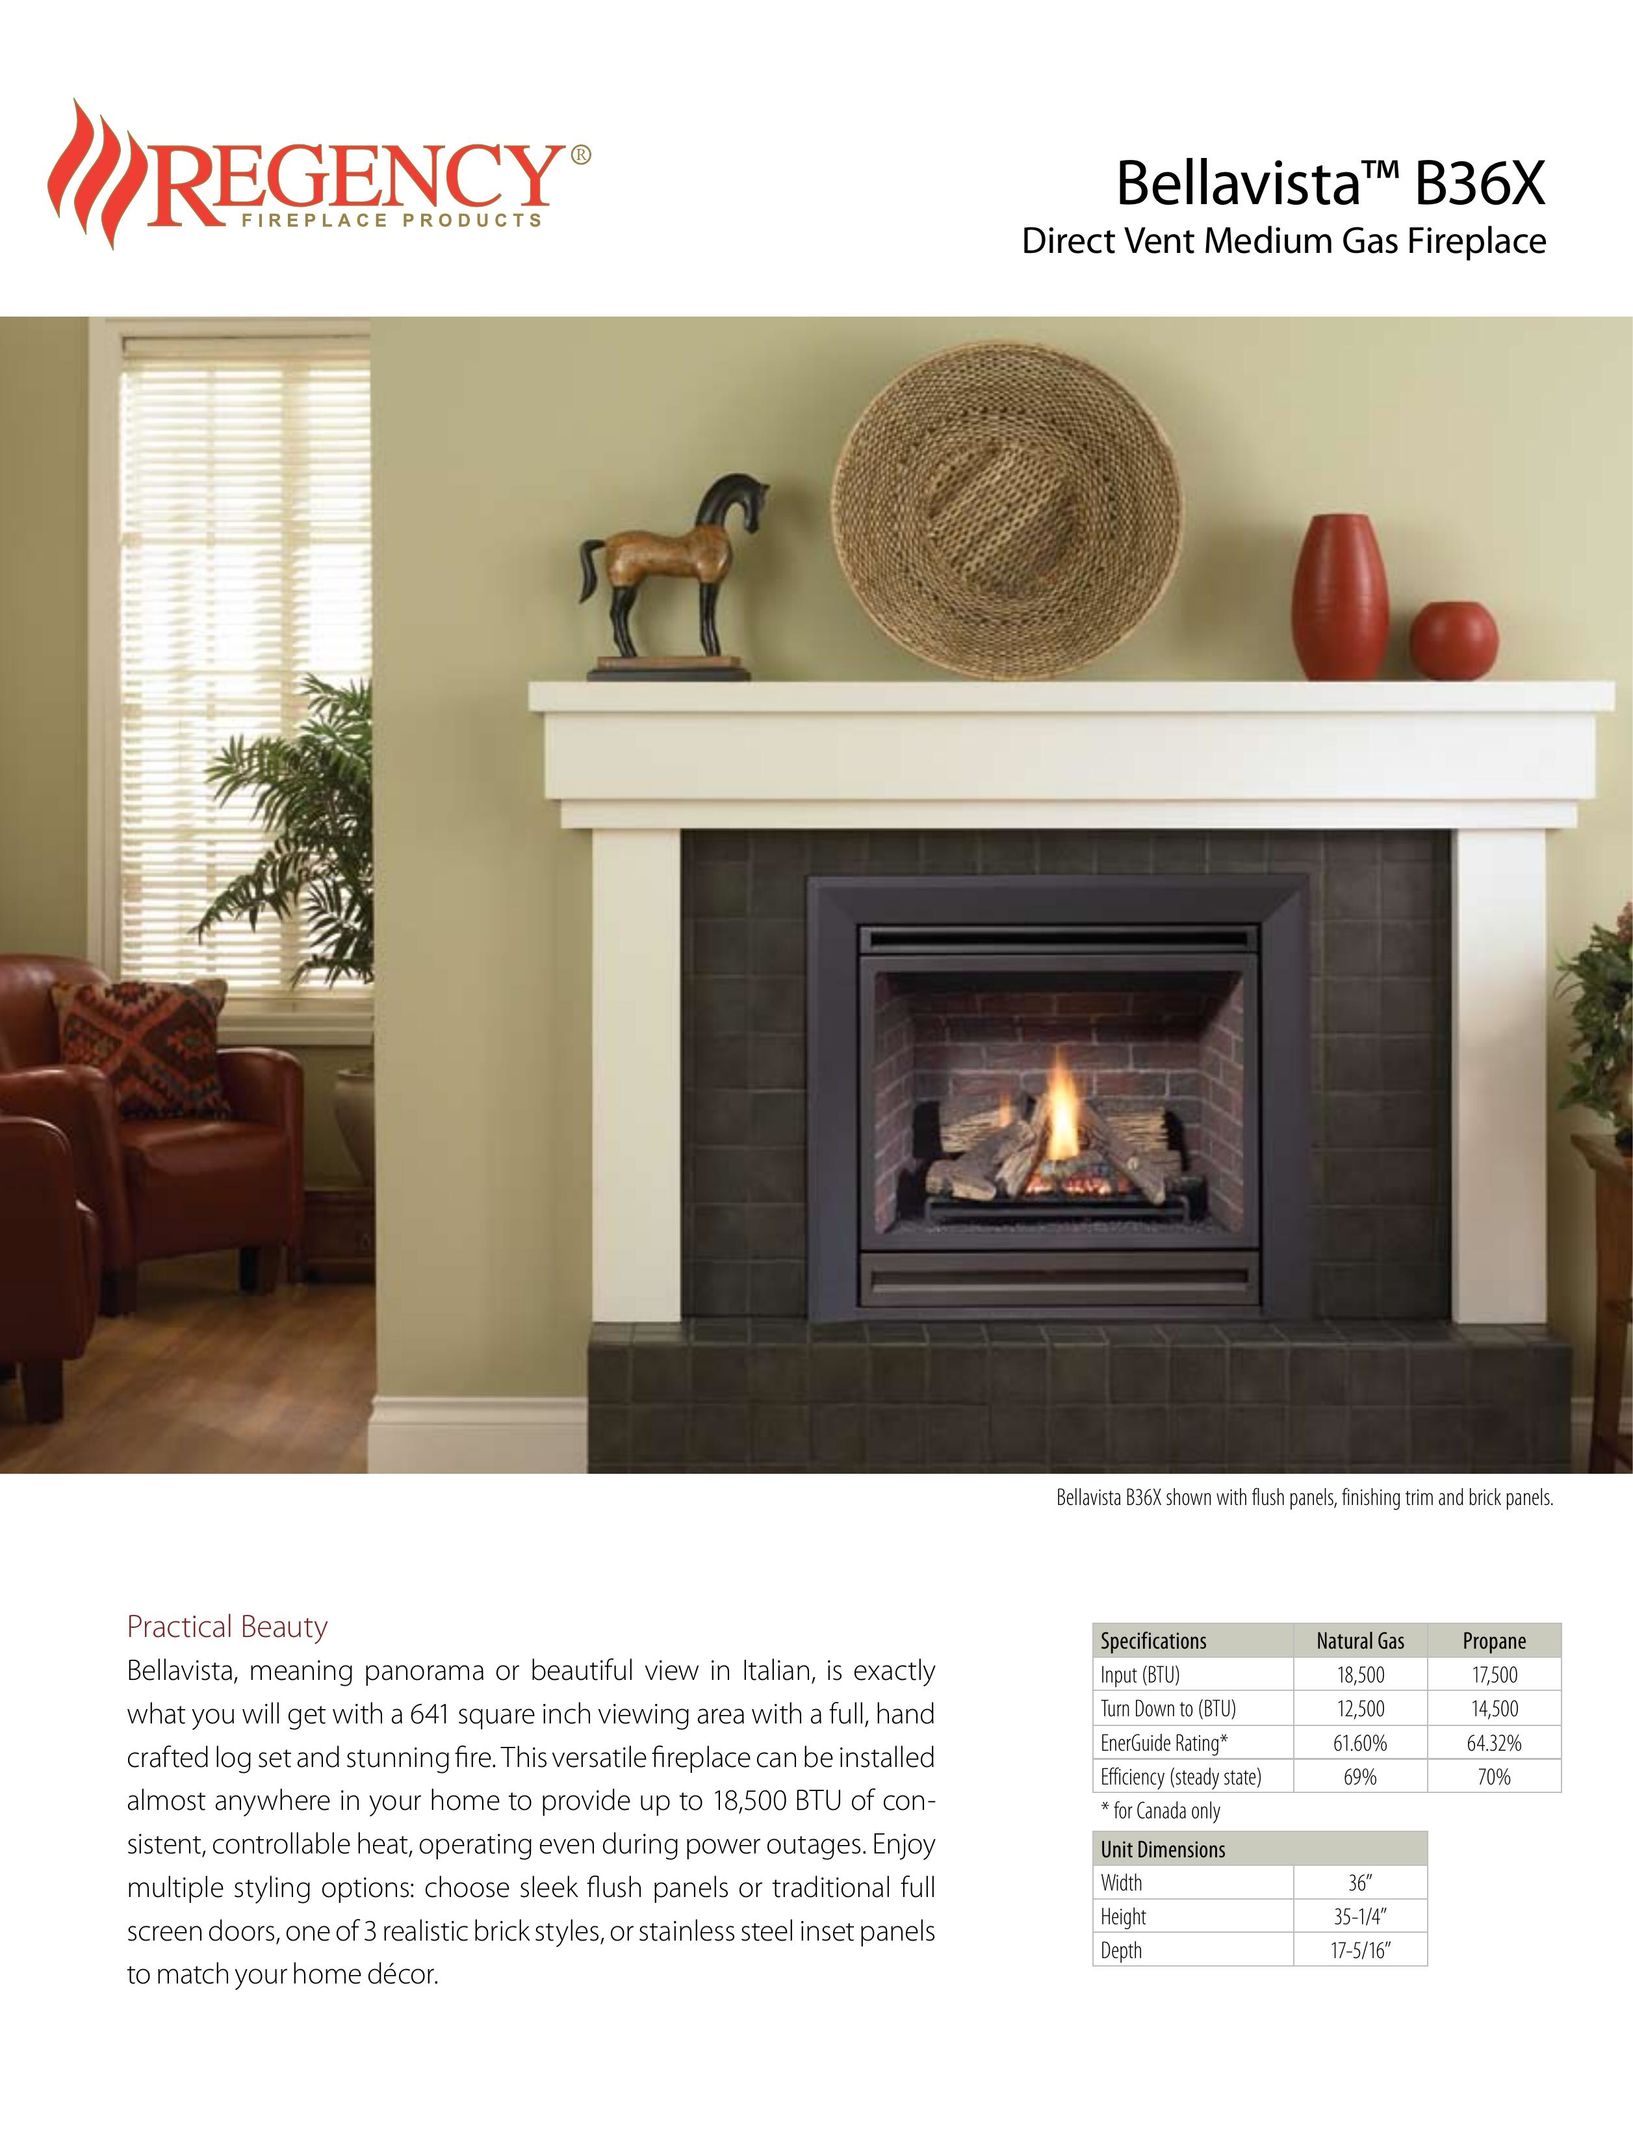 Regency Bellavista B36X Indoor Fireplace User Manual